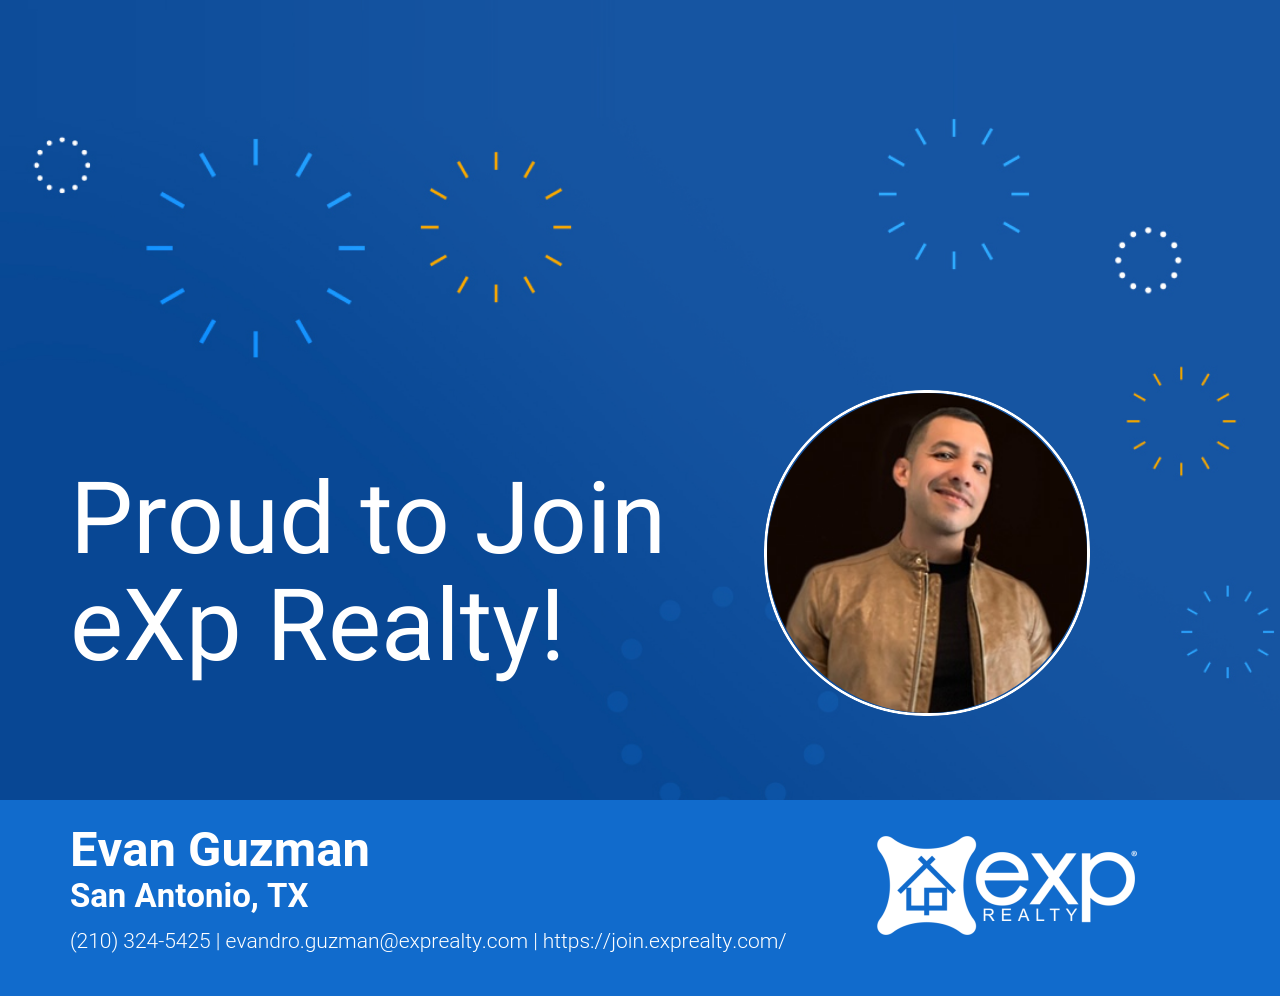 Welcome to eXp Realty Evan Guzman!